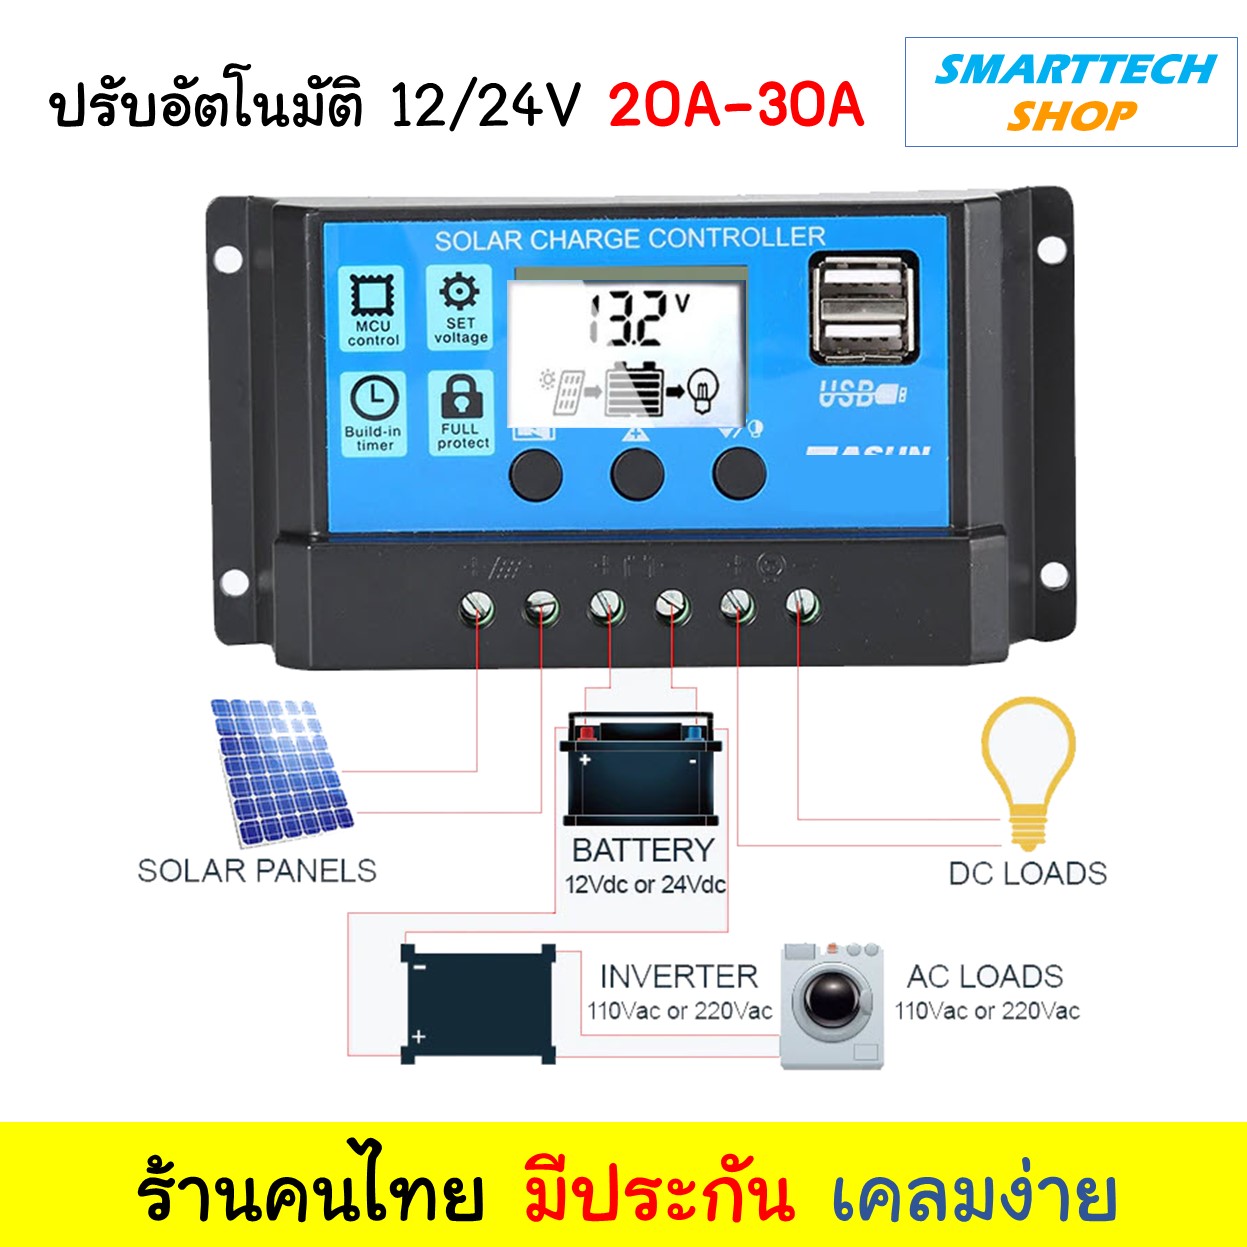 Solar charger 12V/24V PWM 20A-30A (เลือกได้) , โซลาร์ ชาร์จเจอร์  มีประกัน ร้านคนไทย ส่งไวมาก โซล่าชาร์จคอนโทรลเลอร์